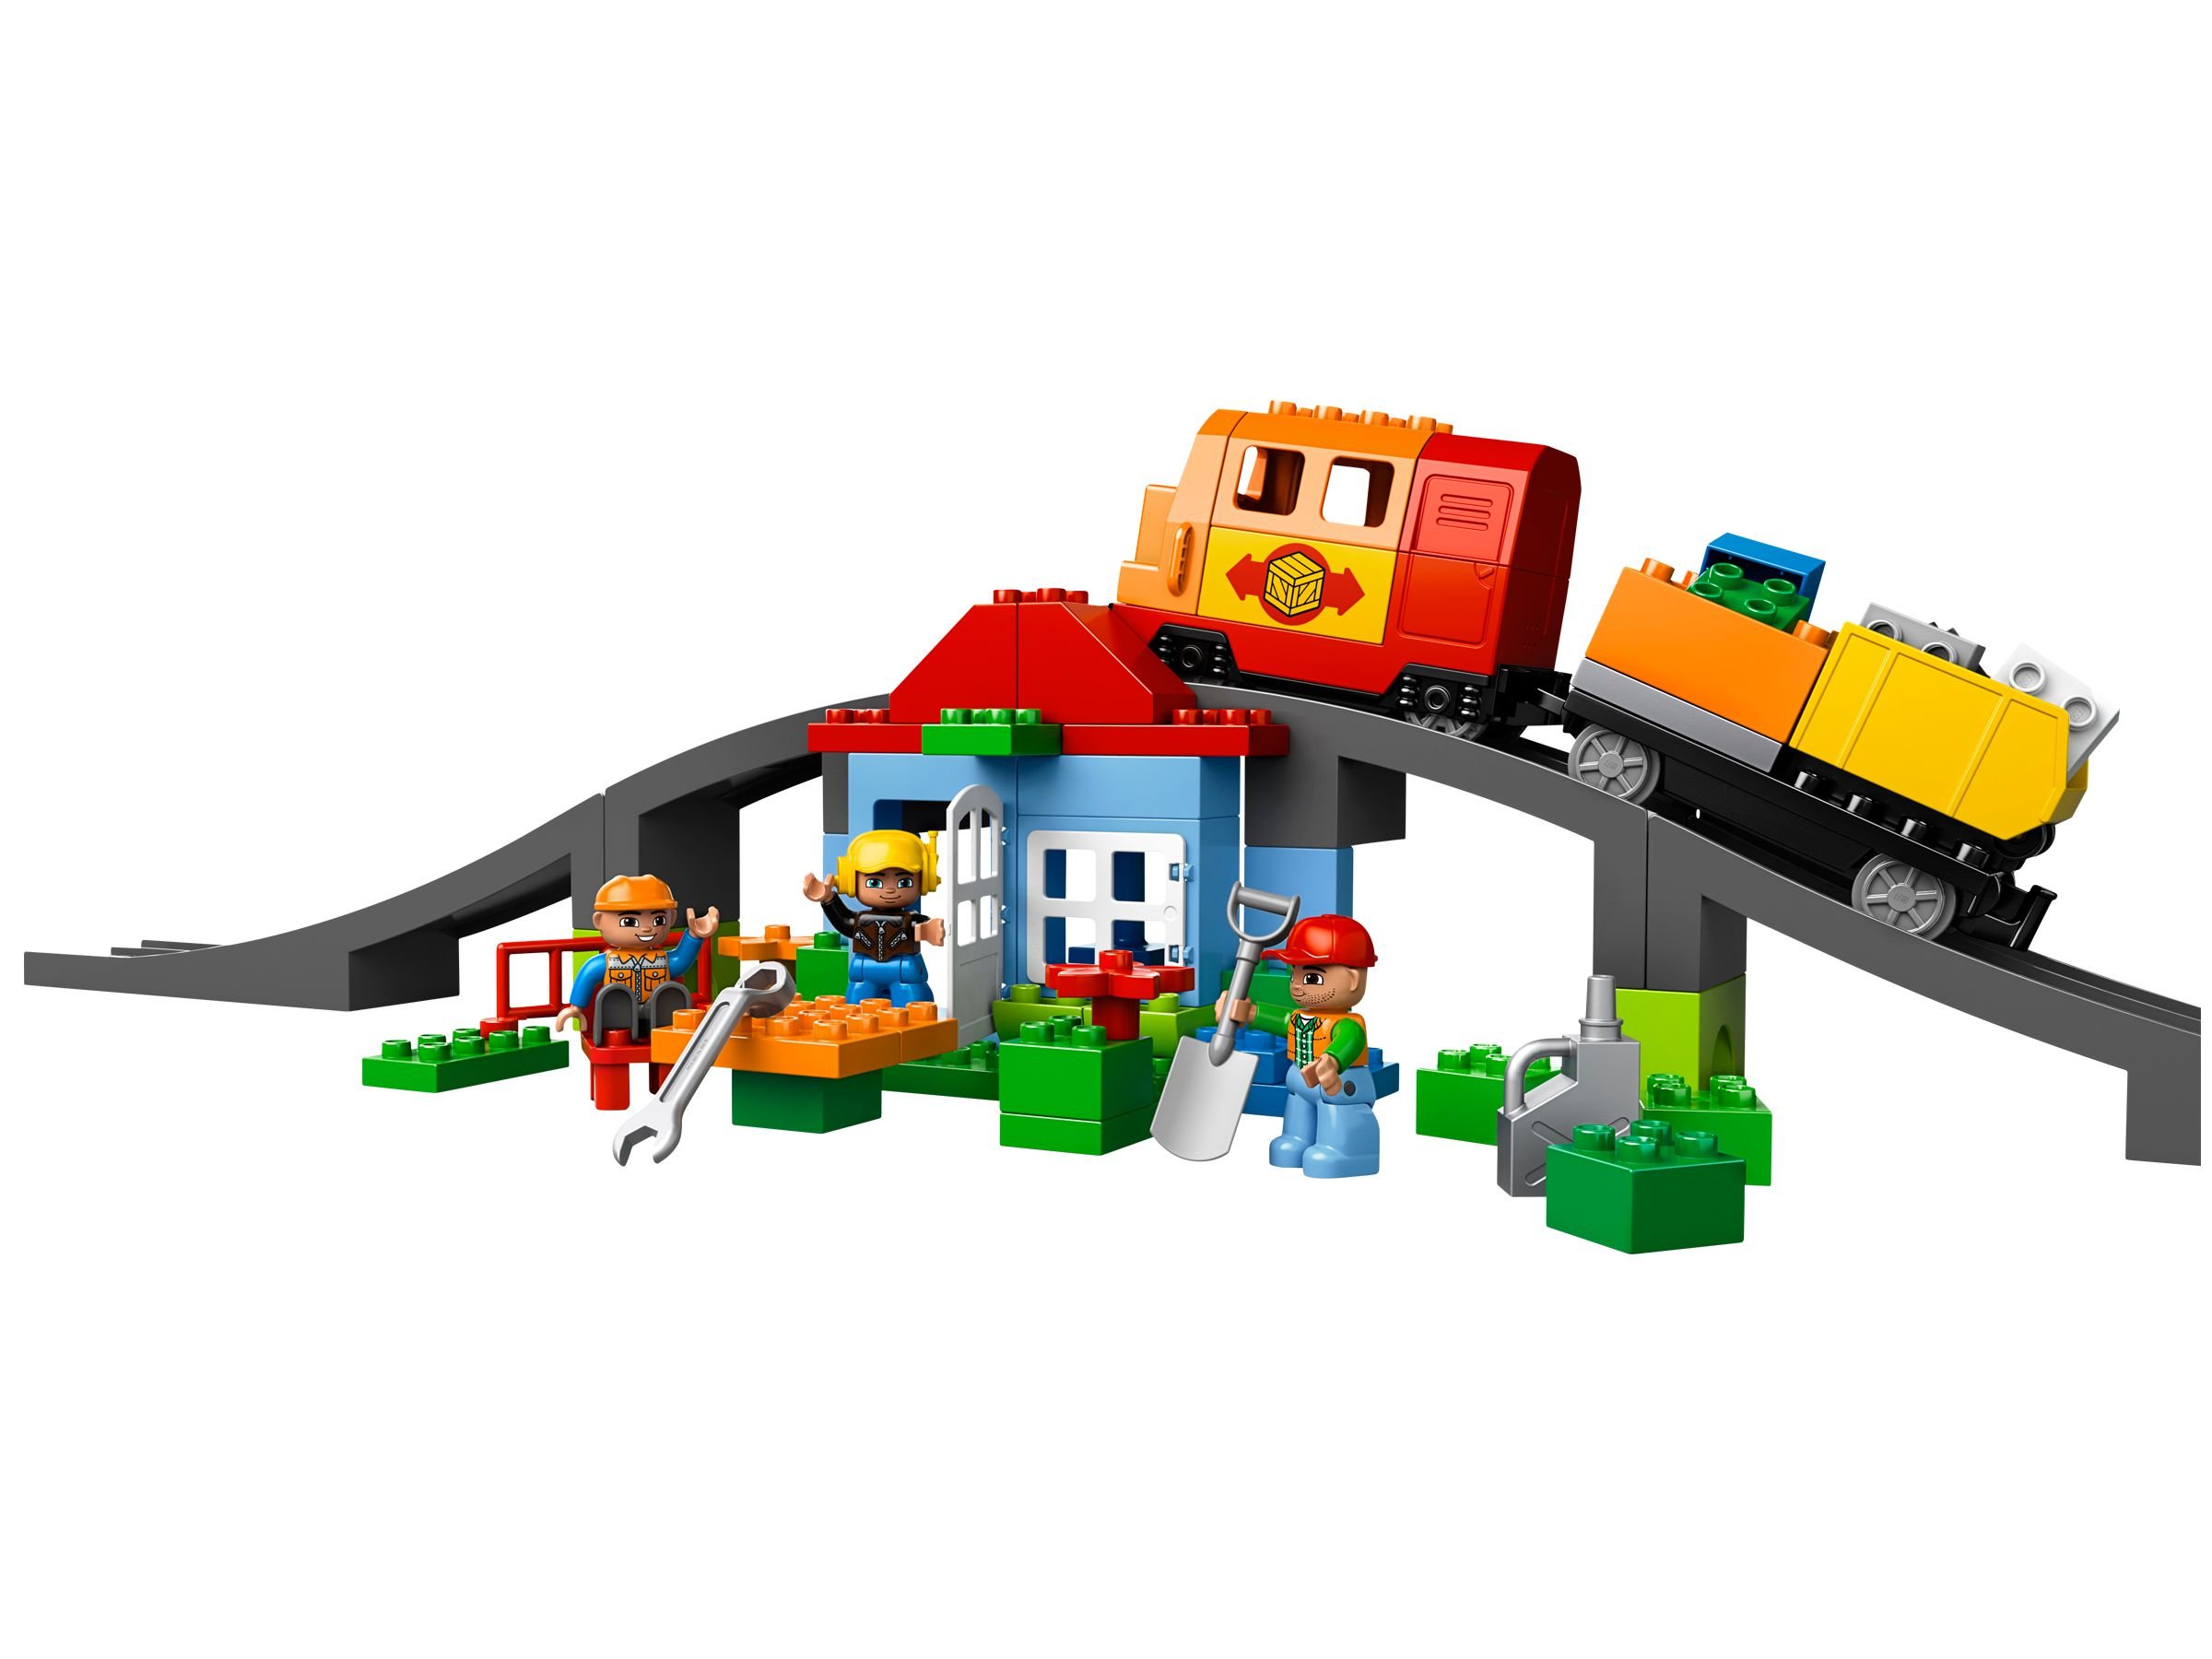 LEGO Duplo 10508 Eisenbahn Super Set LEGO_10508_alt2.jpg